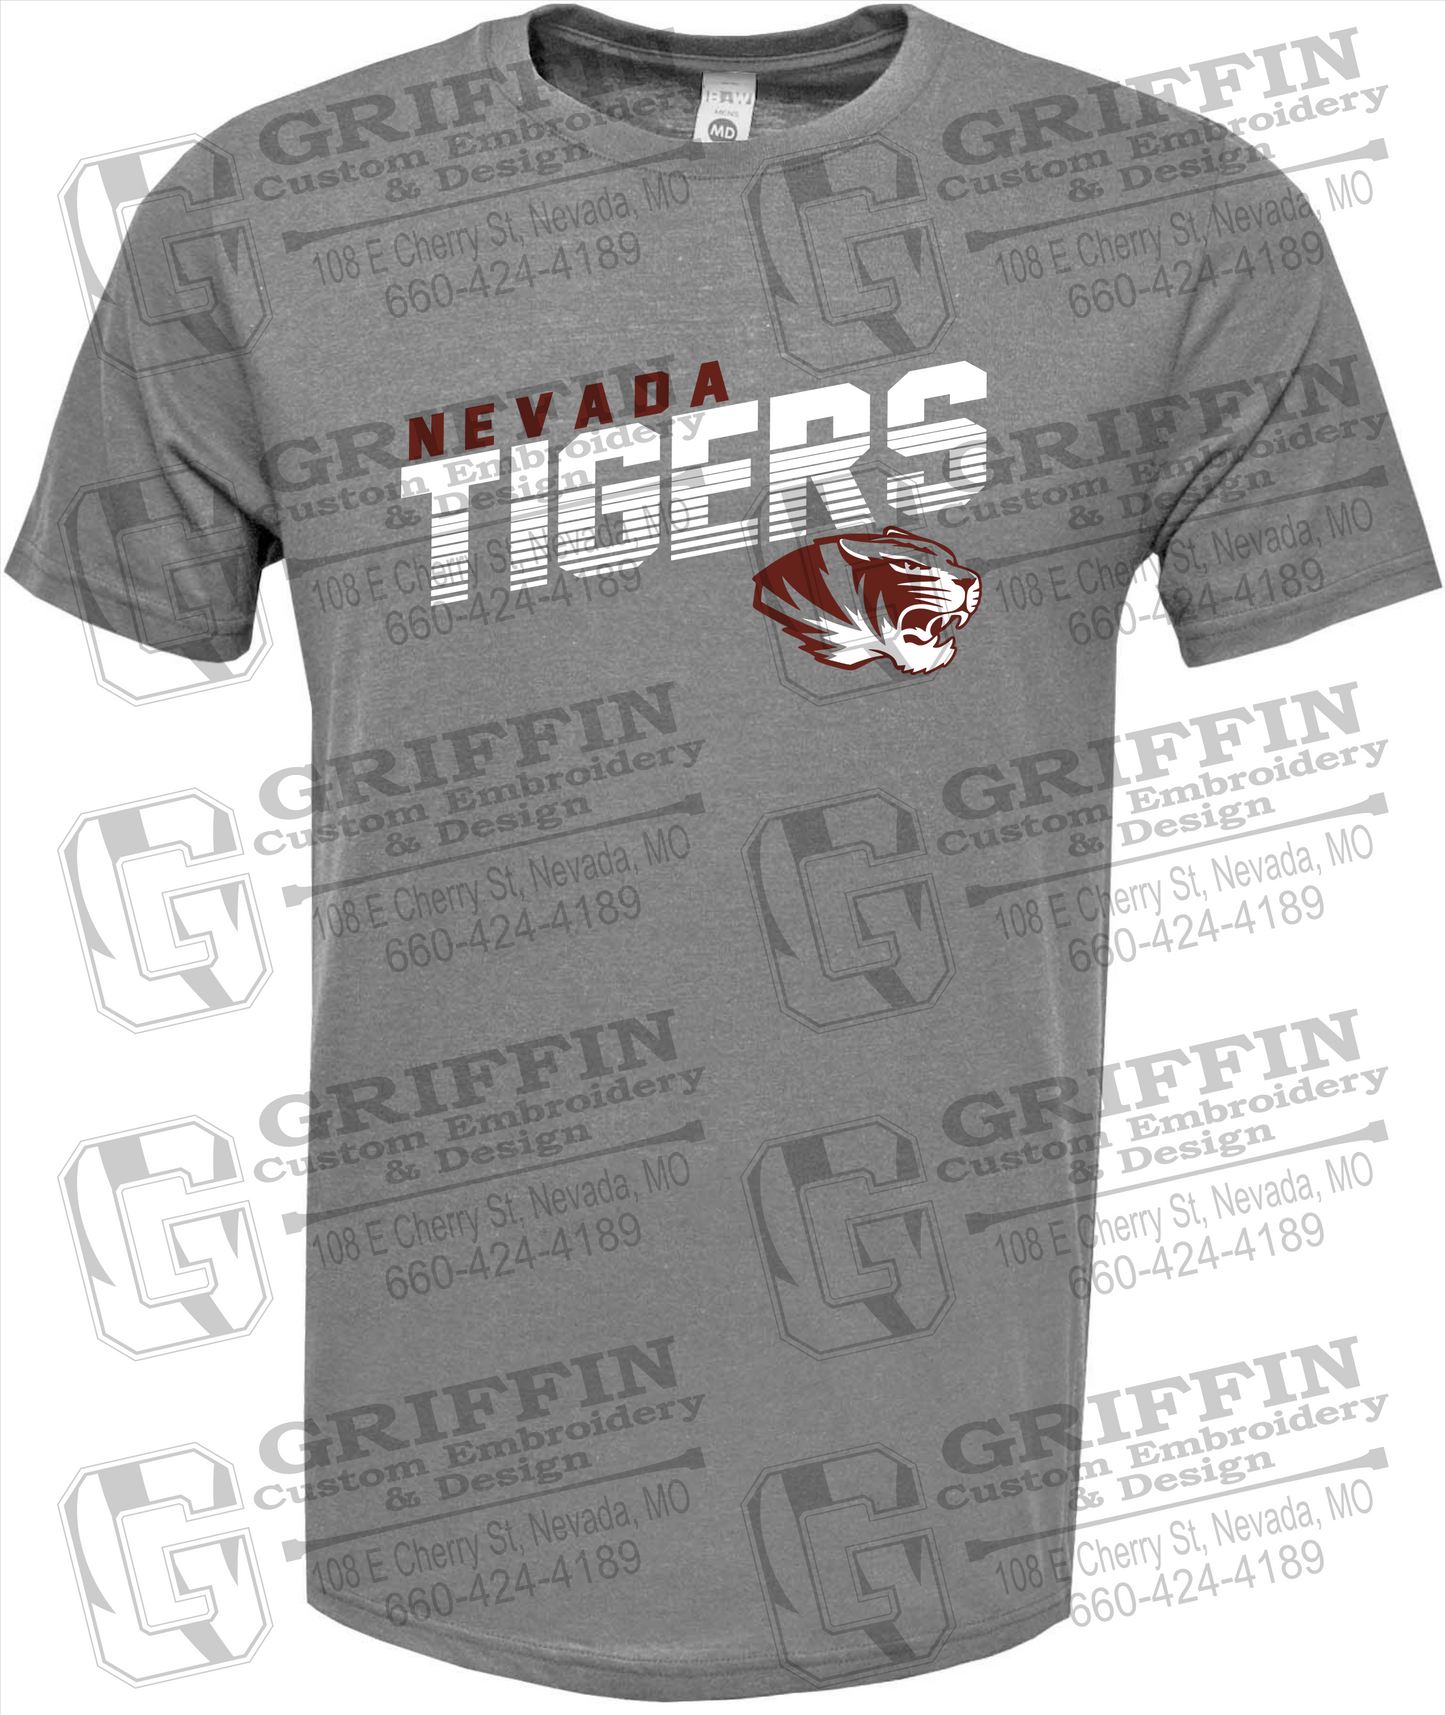 Nevada Tigers 19-A Short Sleeve T-Shirt